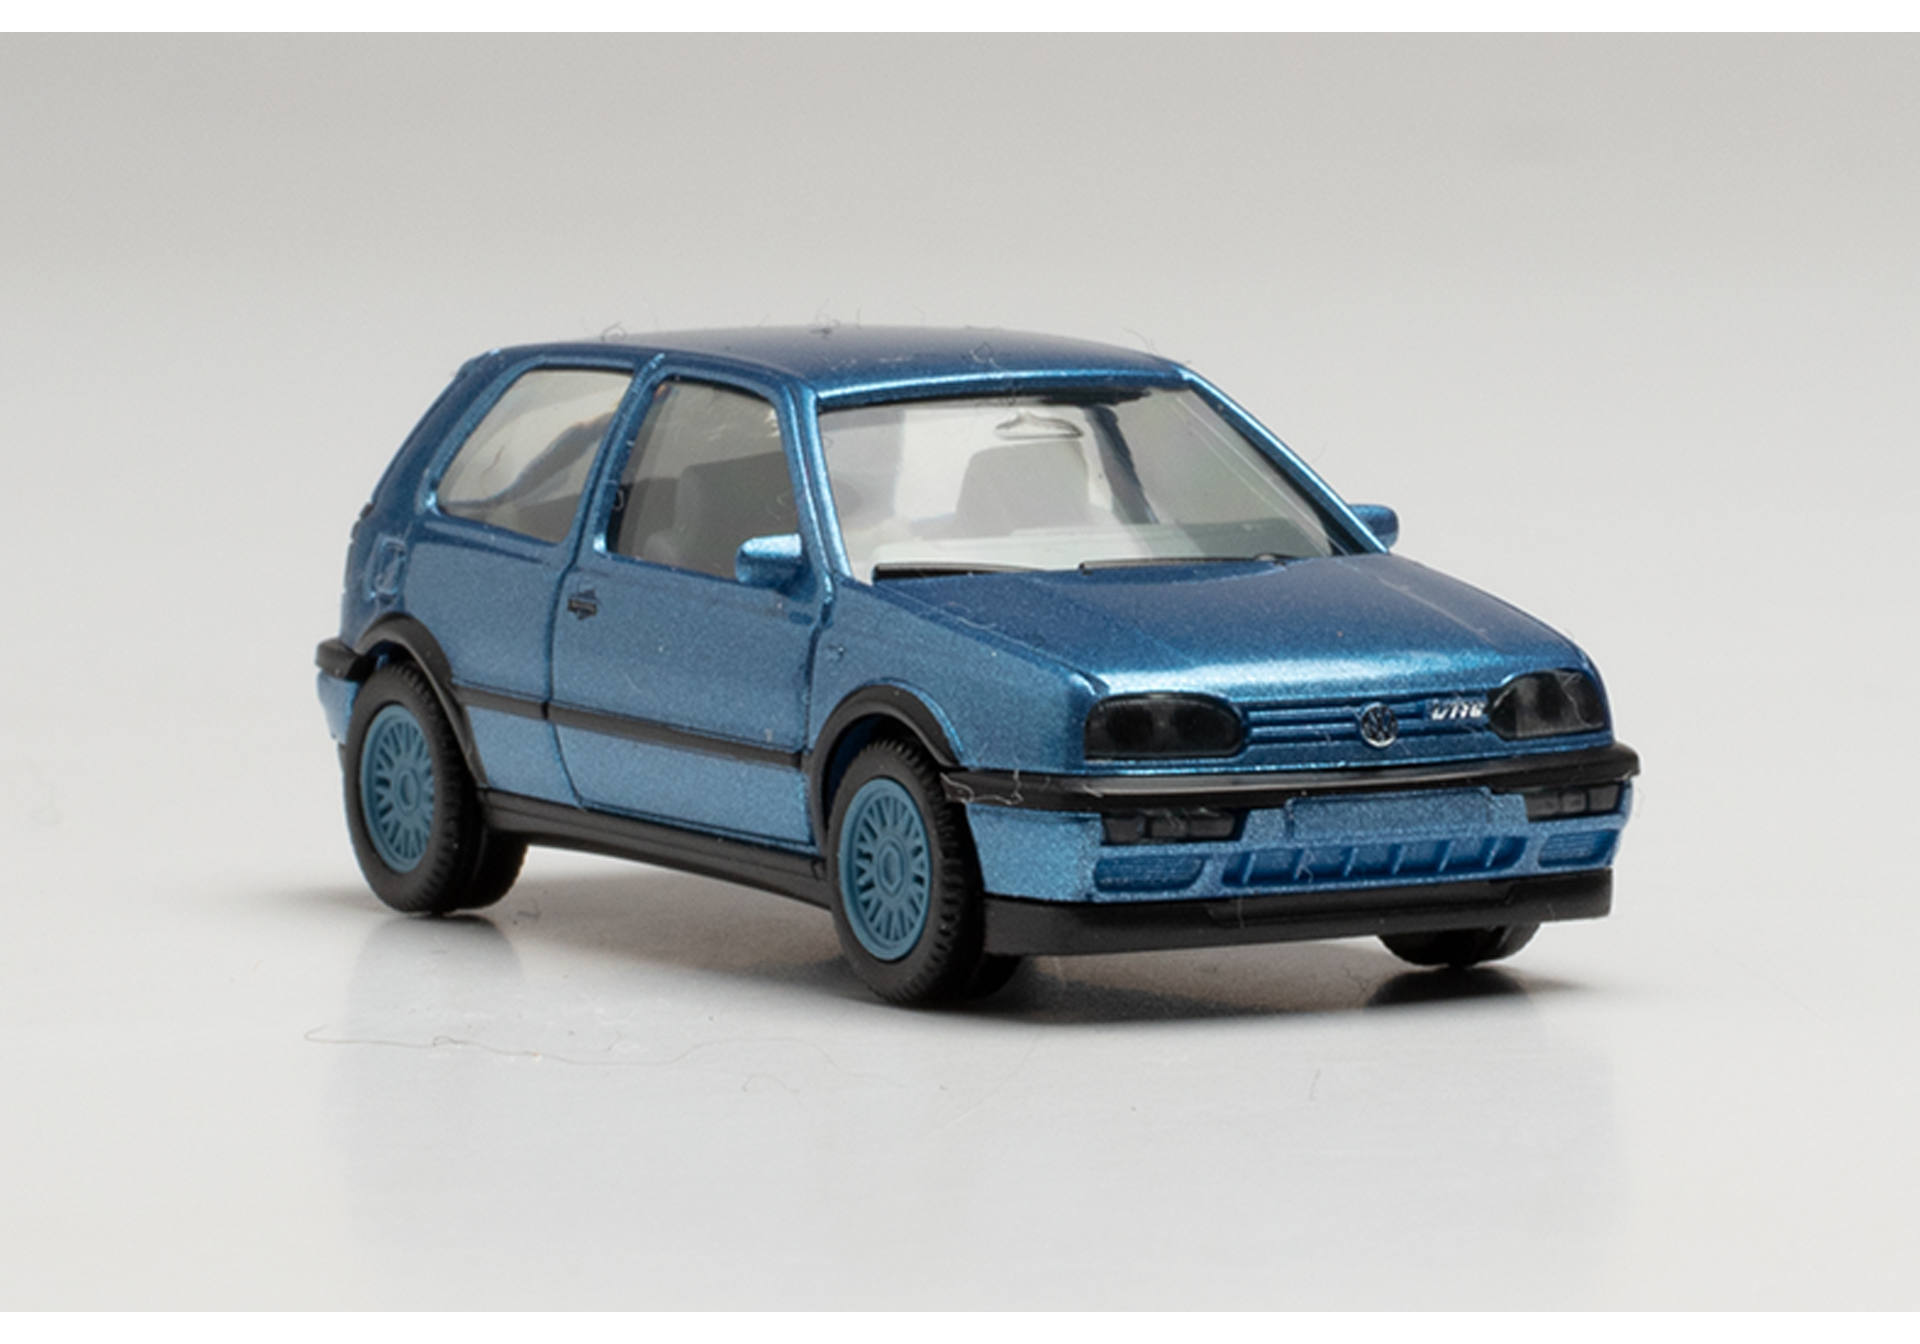 VW Golf III VR6 mit Felgen blue, metallic blue